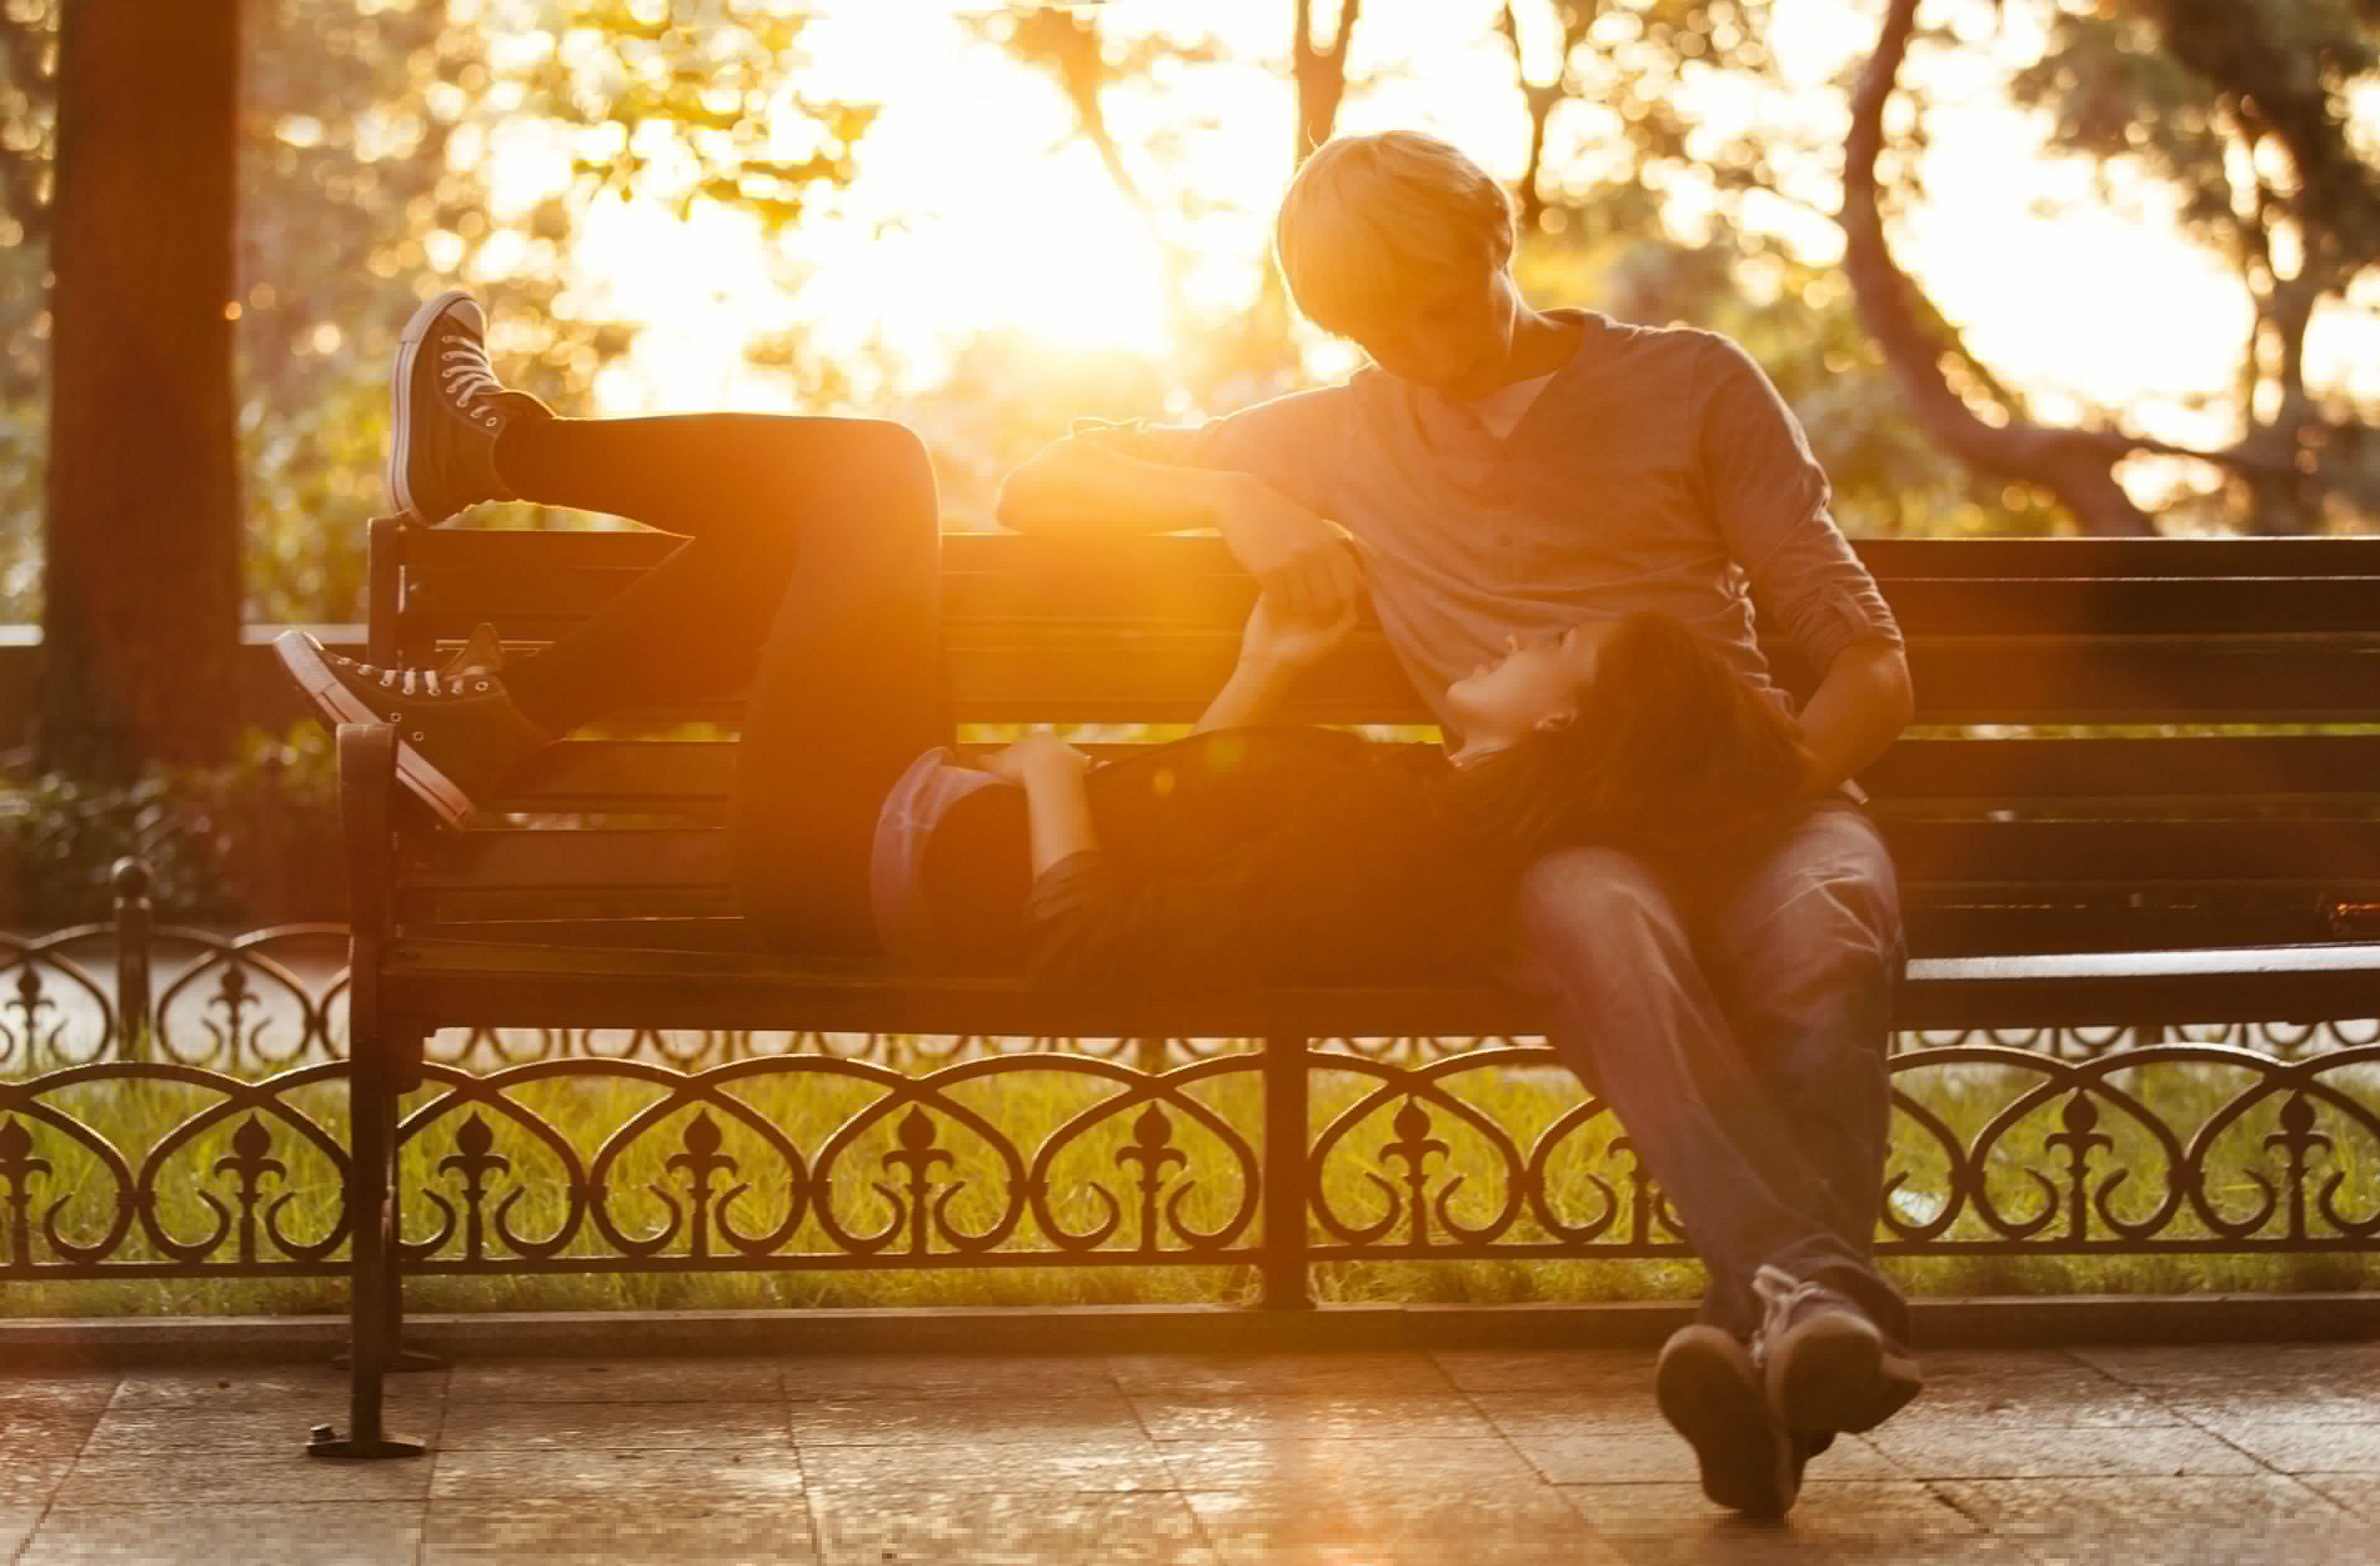 men's gray polo shirt and gray pants, girl, the sun, love, bench